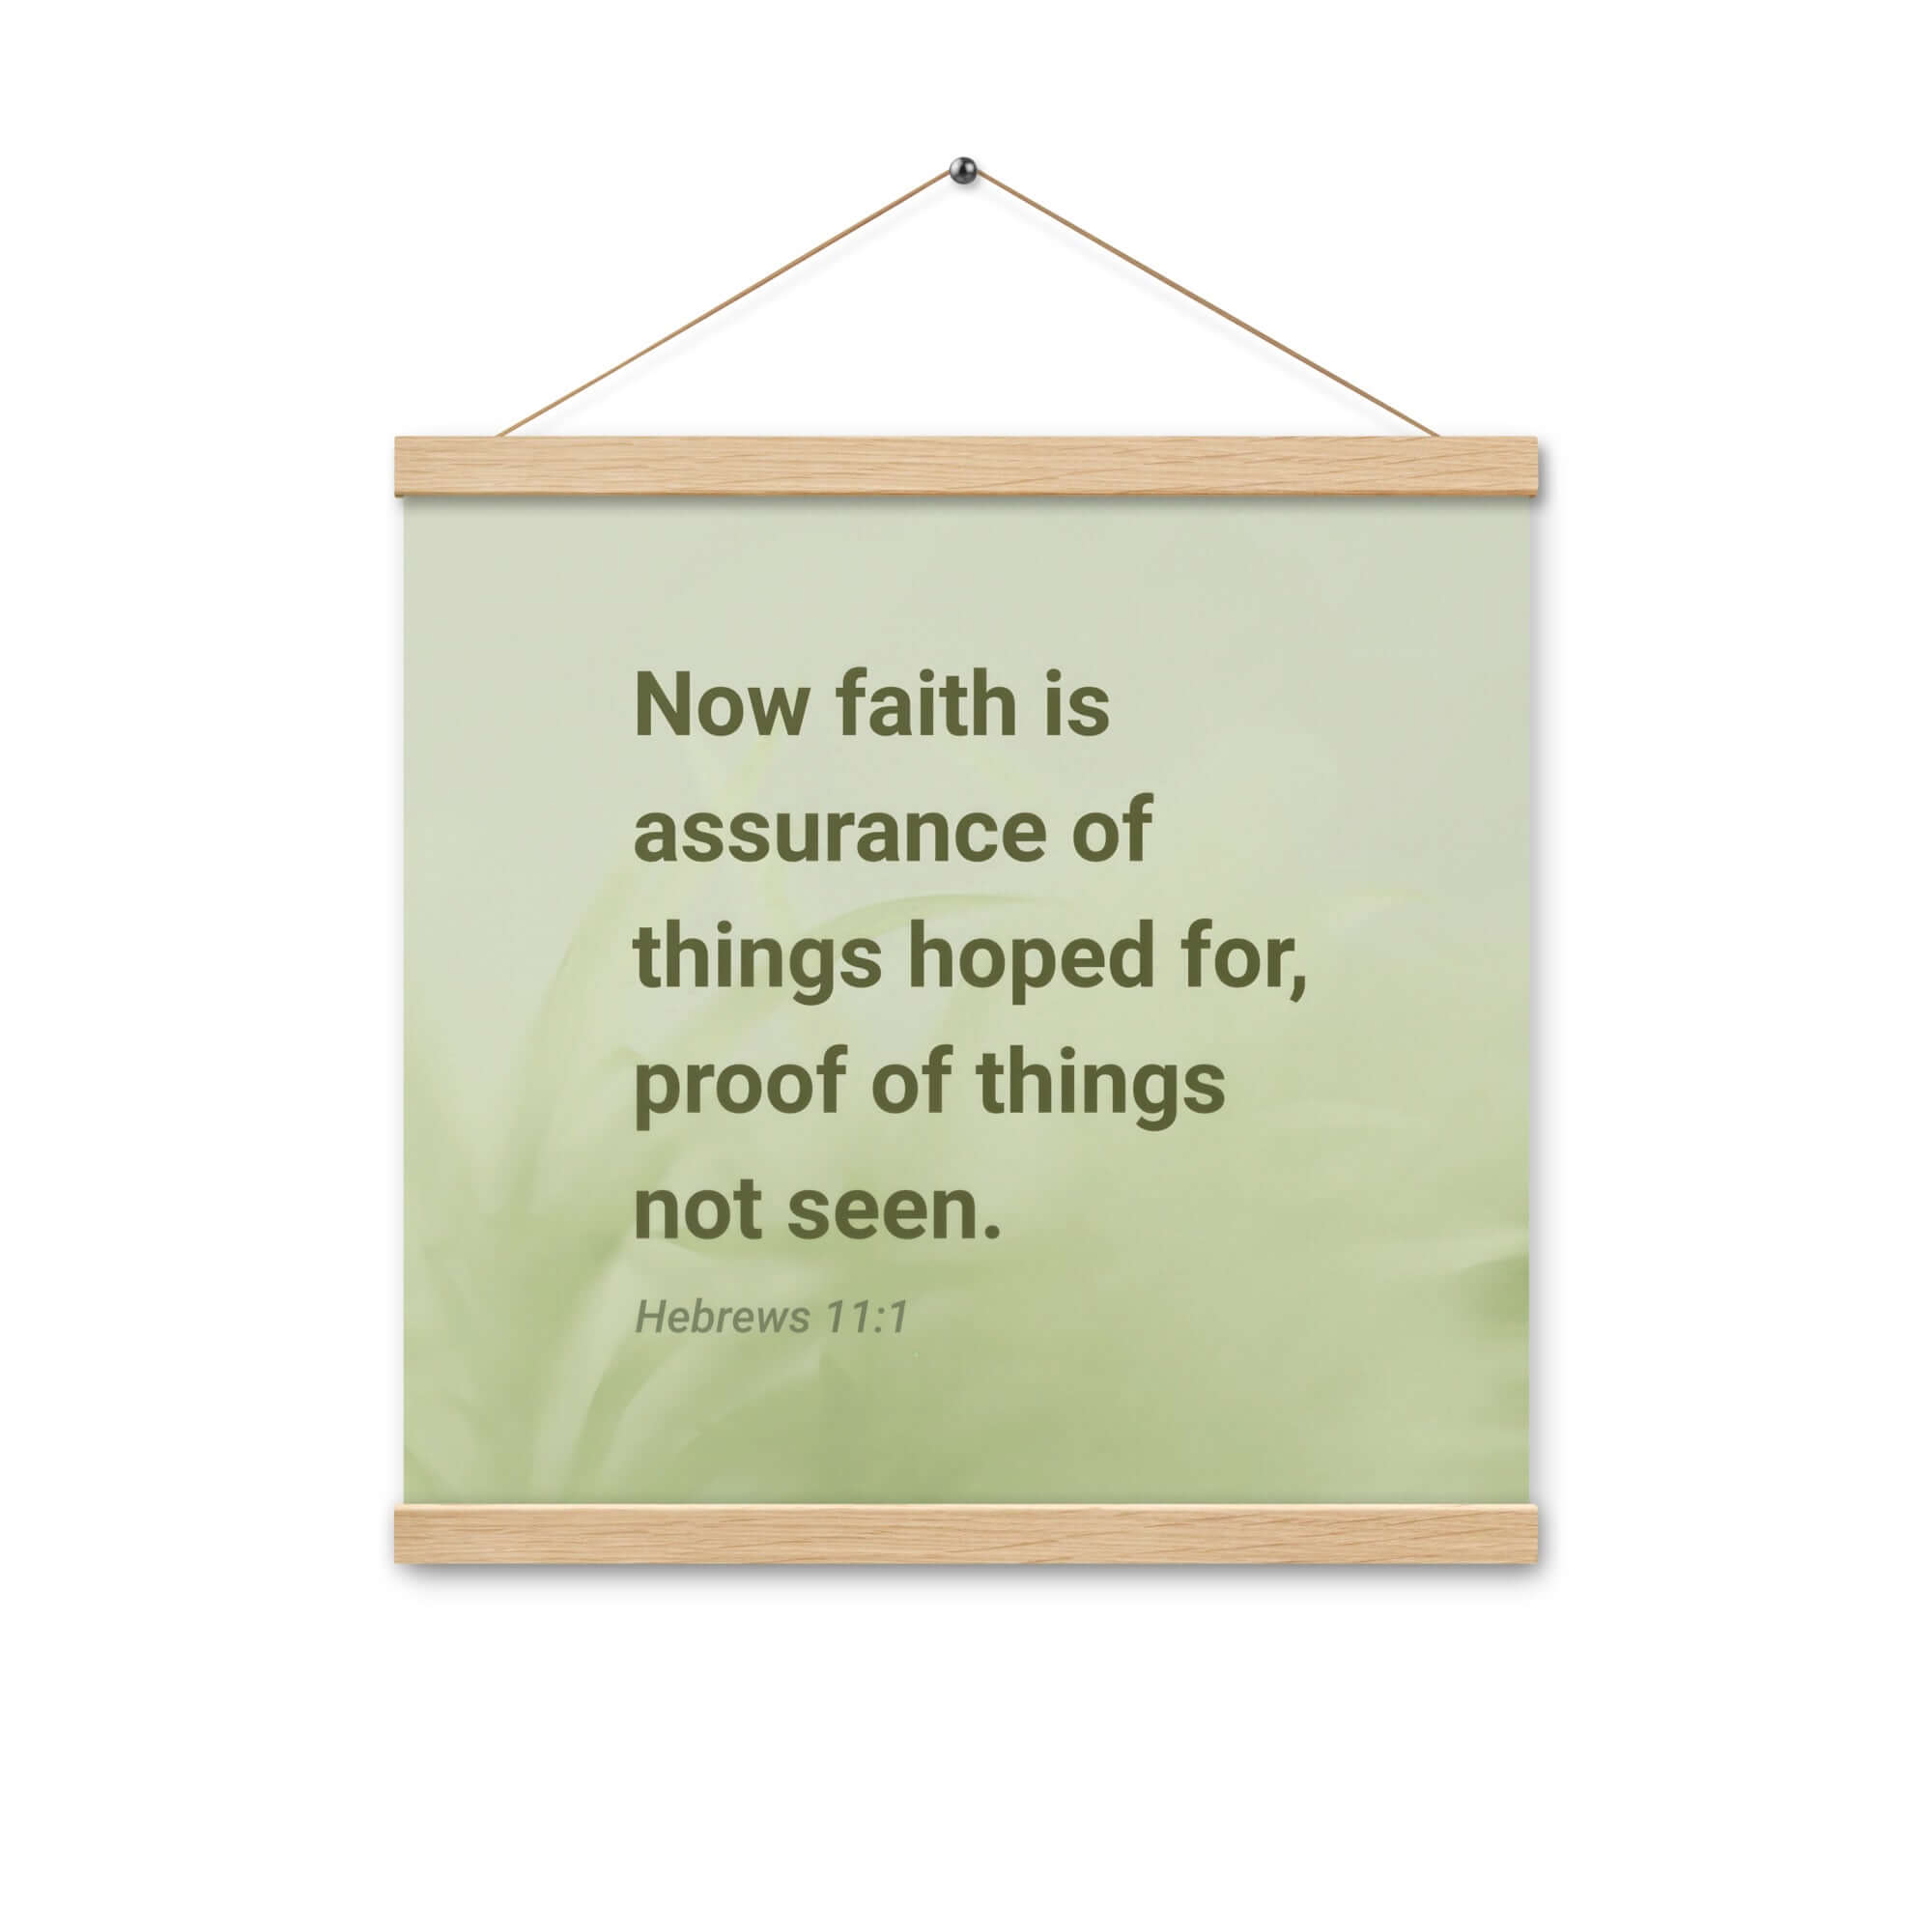 Heb 11:1 - Bible Verse, faith is assurance Enhanced Matte Paper Poster With Hanger